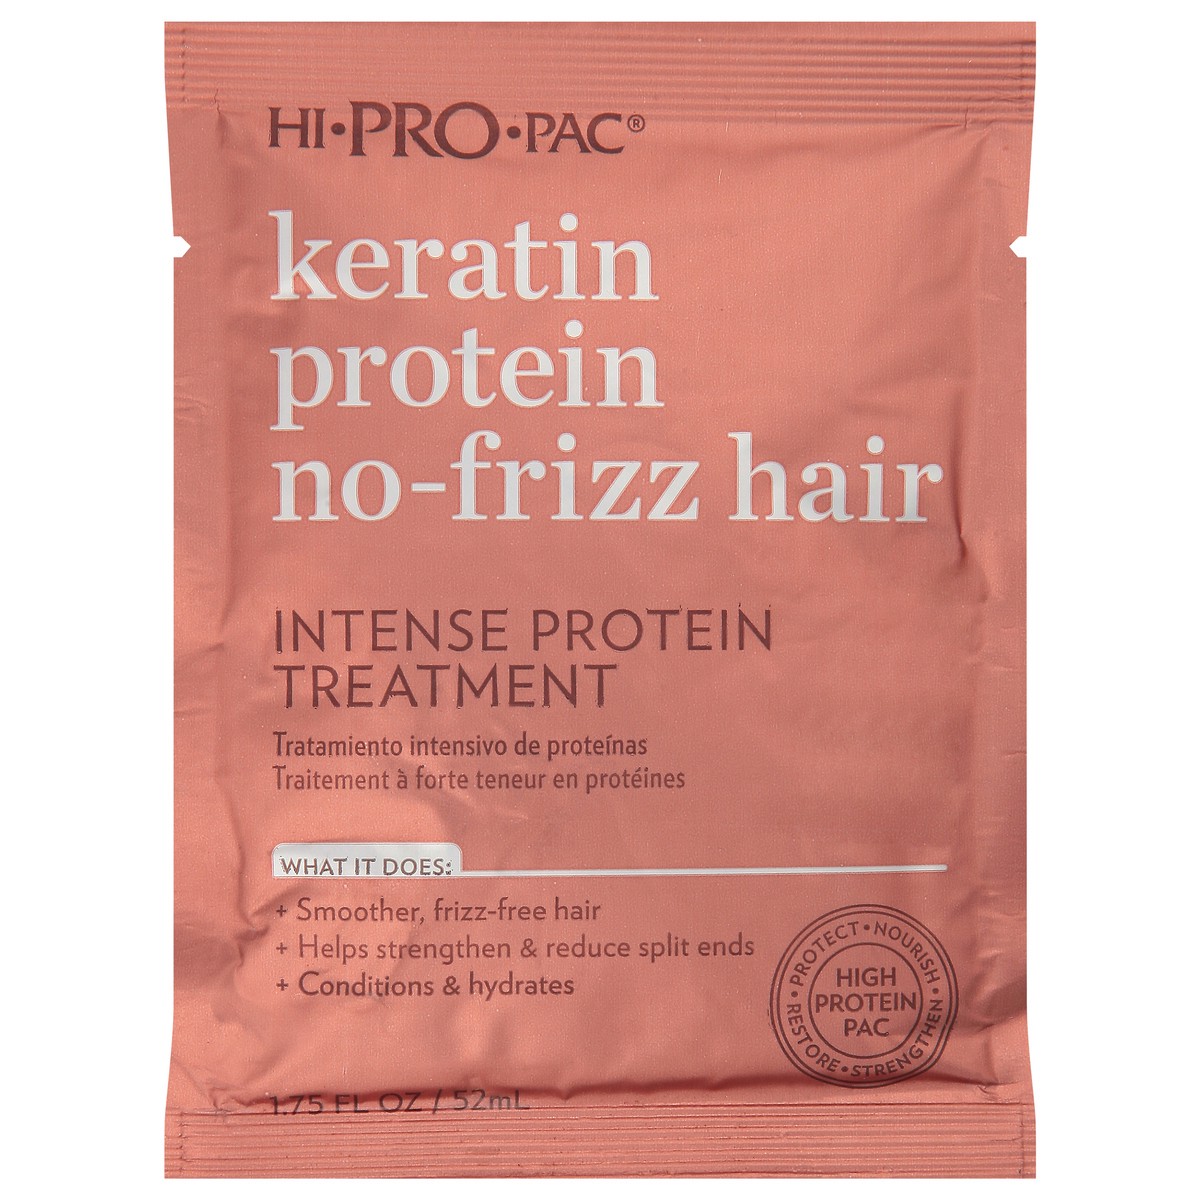 slide 1 of 9, Hi-Pro-Pac No-Frizz Hair Keratin Protein Intense Protein Treatment 1.75 fl oz, 1.75 fl oz